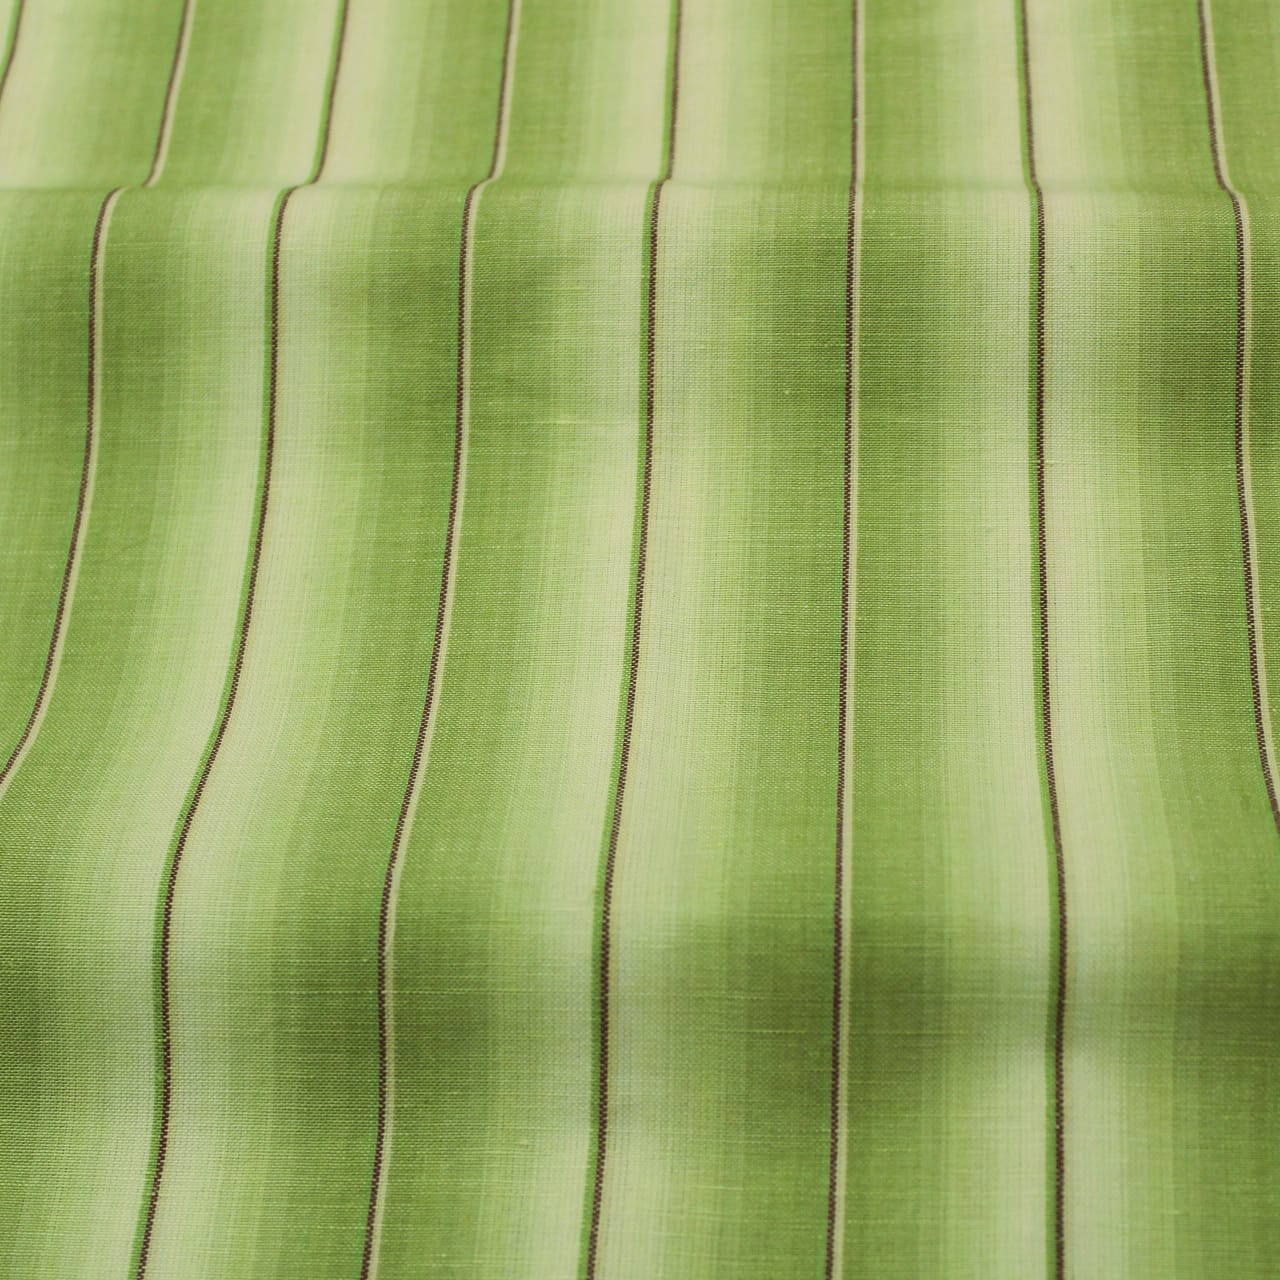 ALPHA Woven Cotton Stripes 1 Pc Table Cover - Green